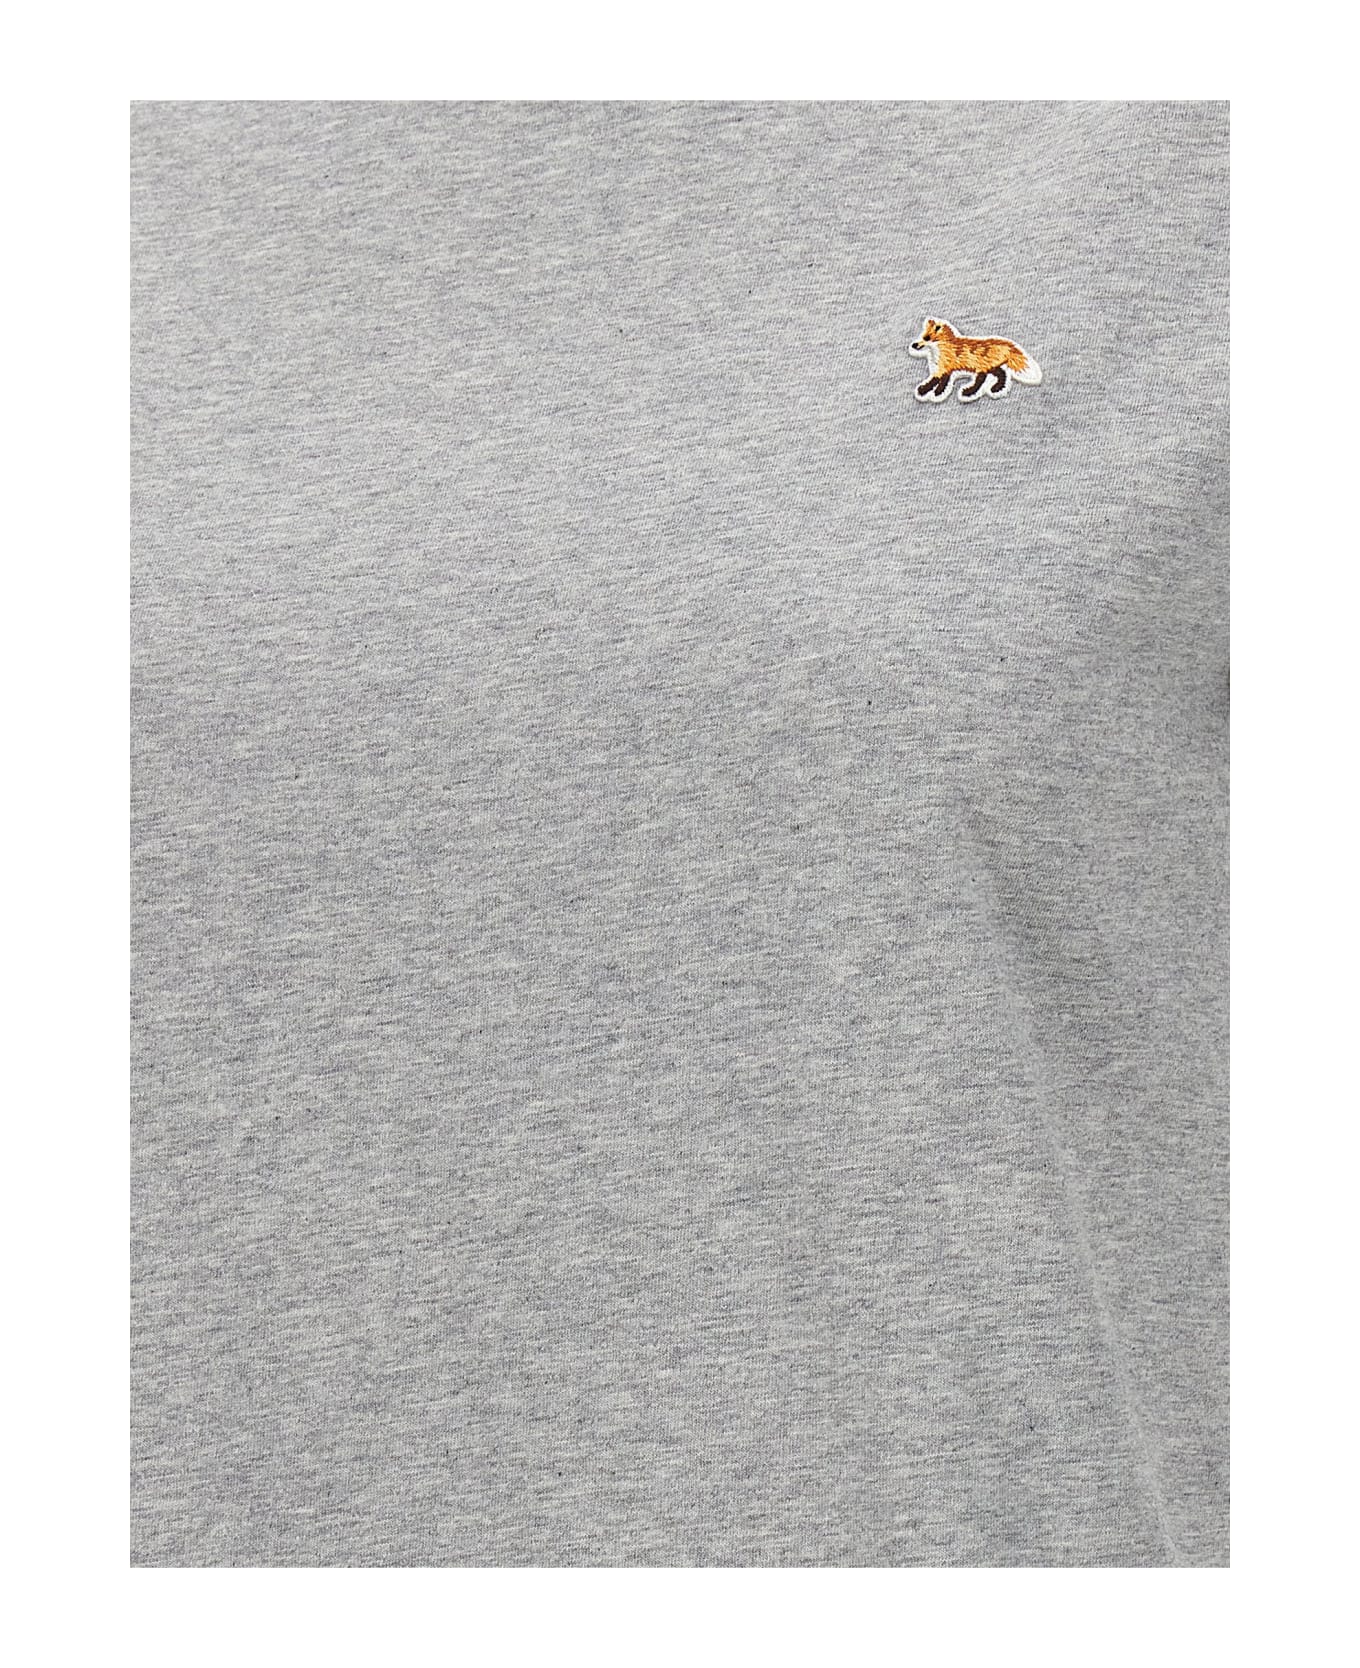 Maison Kitsuné 'baby Fox' T-shirt - Grey